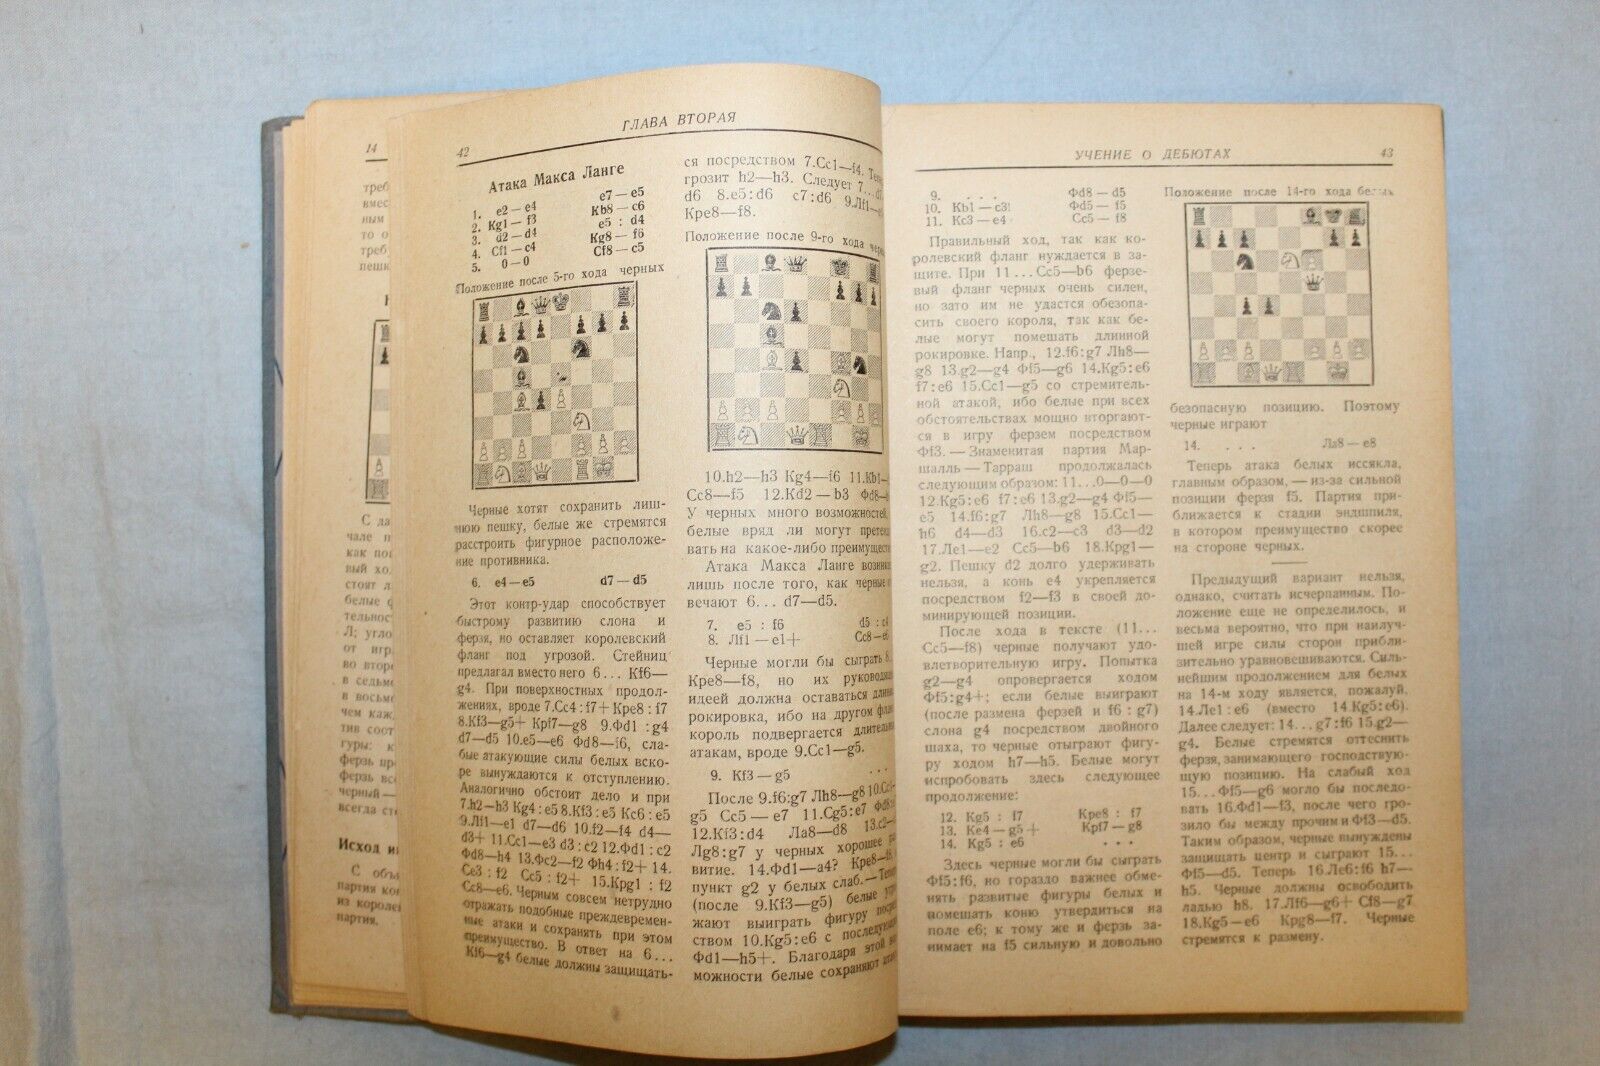 11714.Soviet Chess Book: Chess Game Tutorial. Lasker. 1937